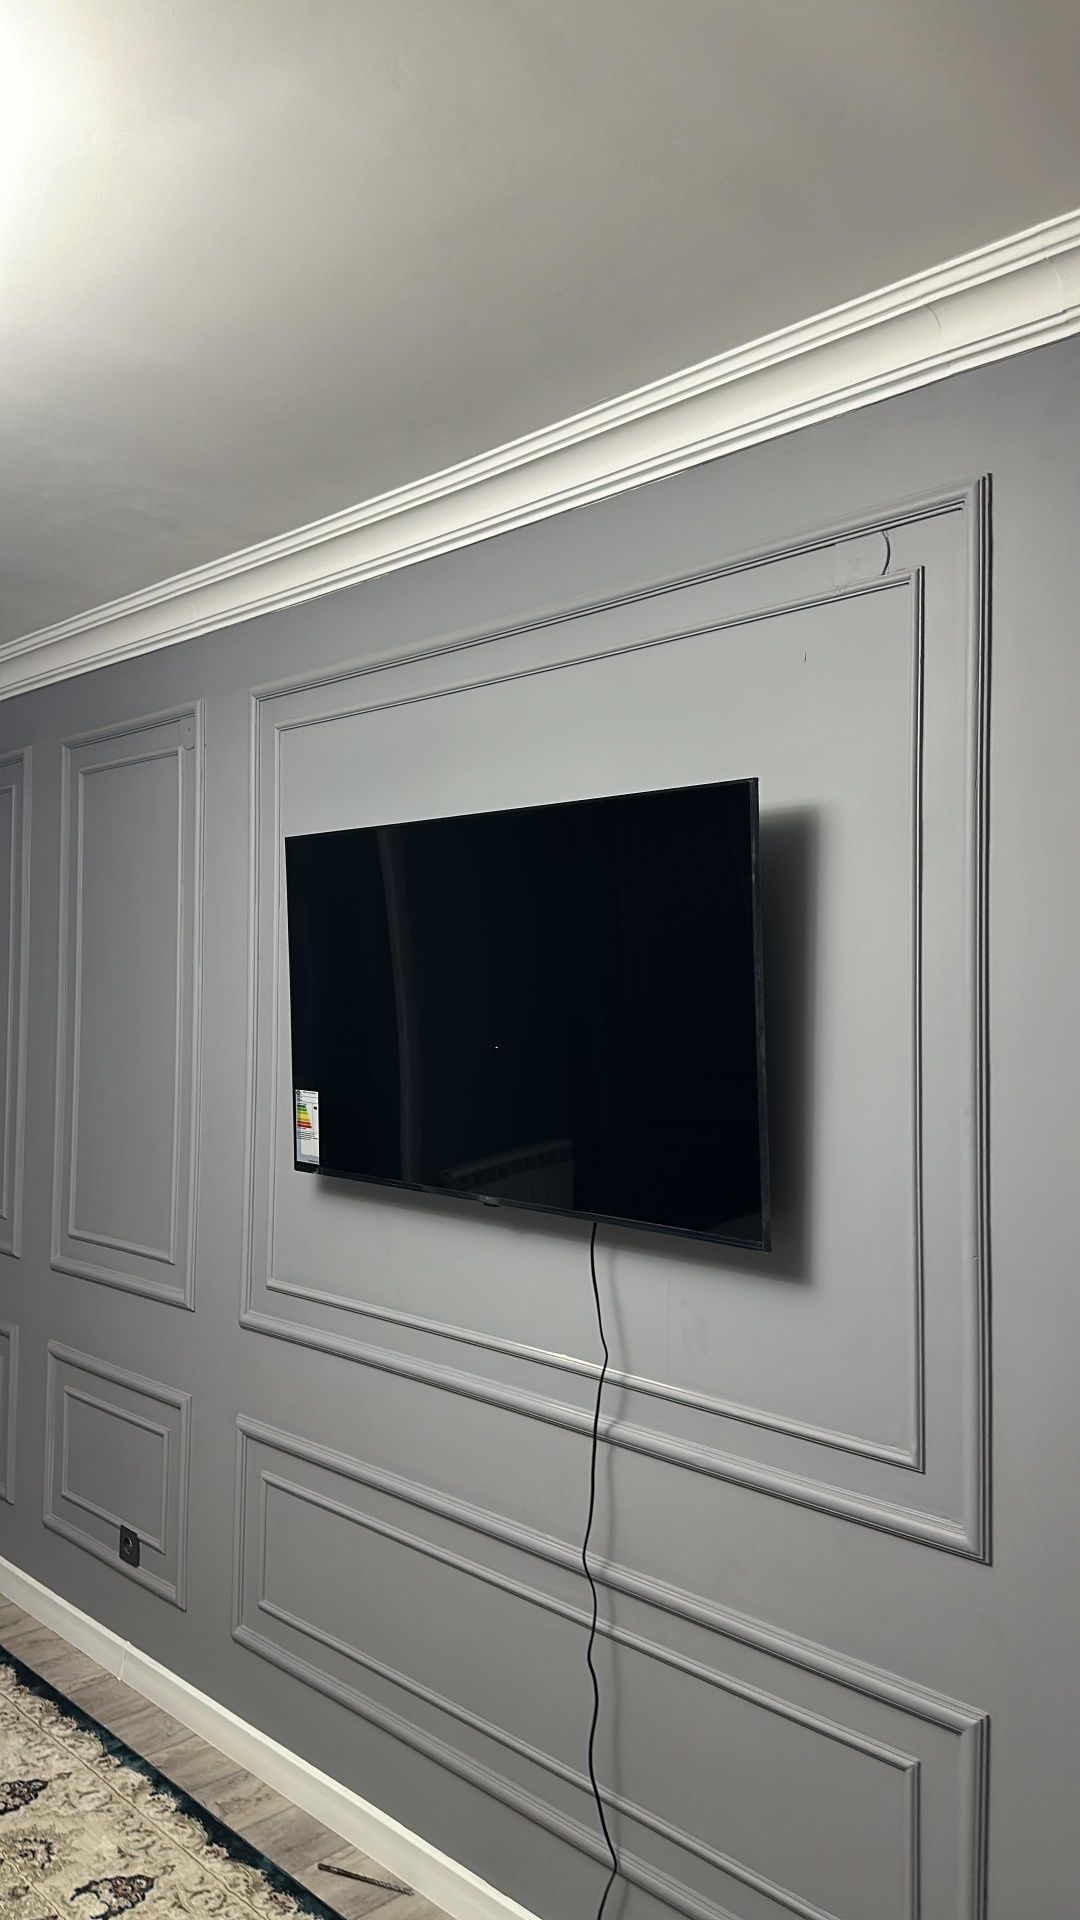 Установка Отау тв и Алма тв подвеска телевизора на стену